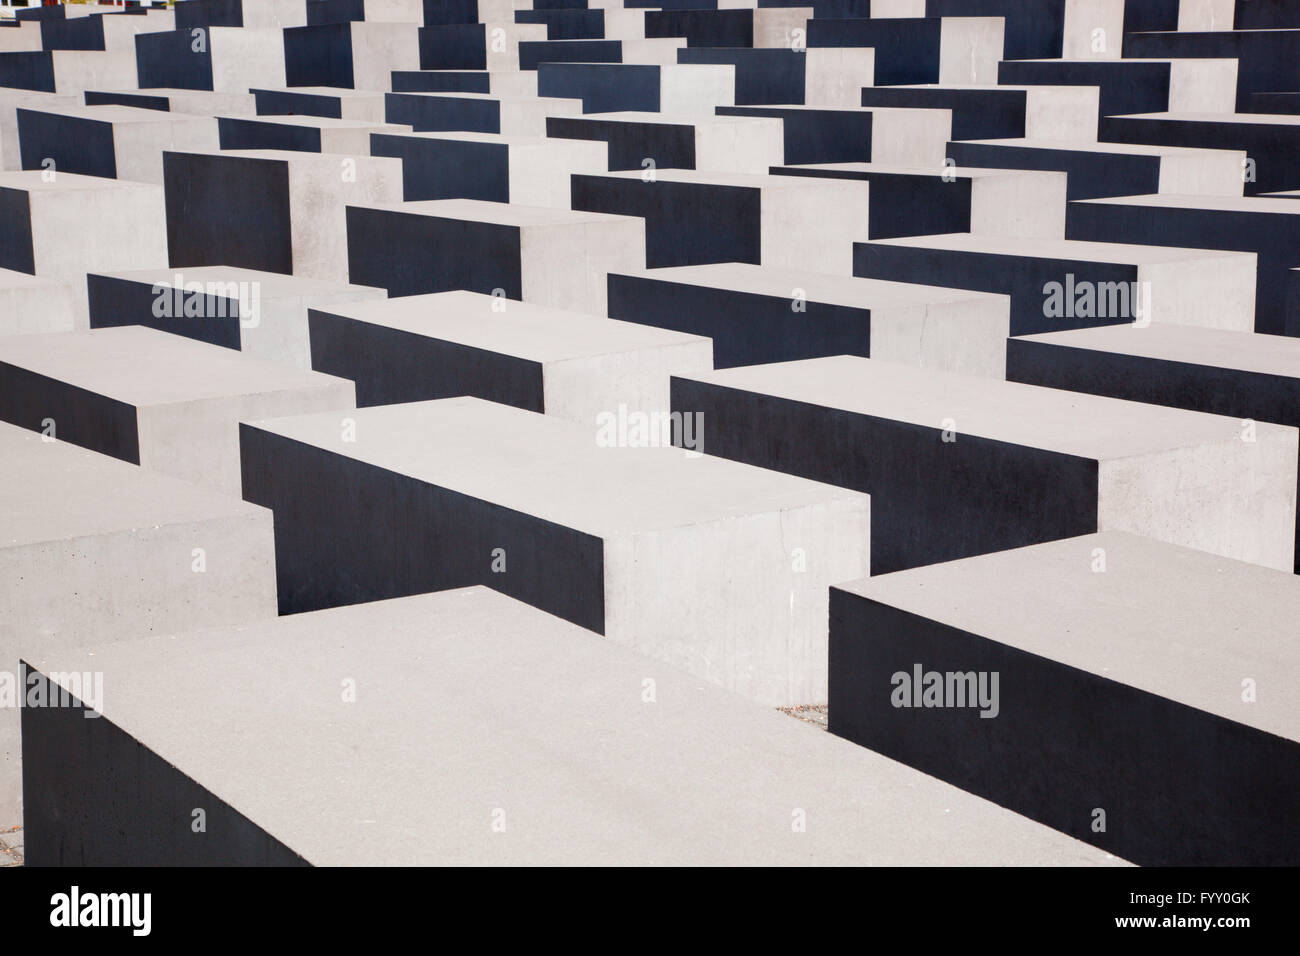 L'Holocaust Memorial, Berlin, Allemagne Banque D'Images